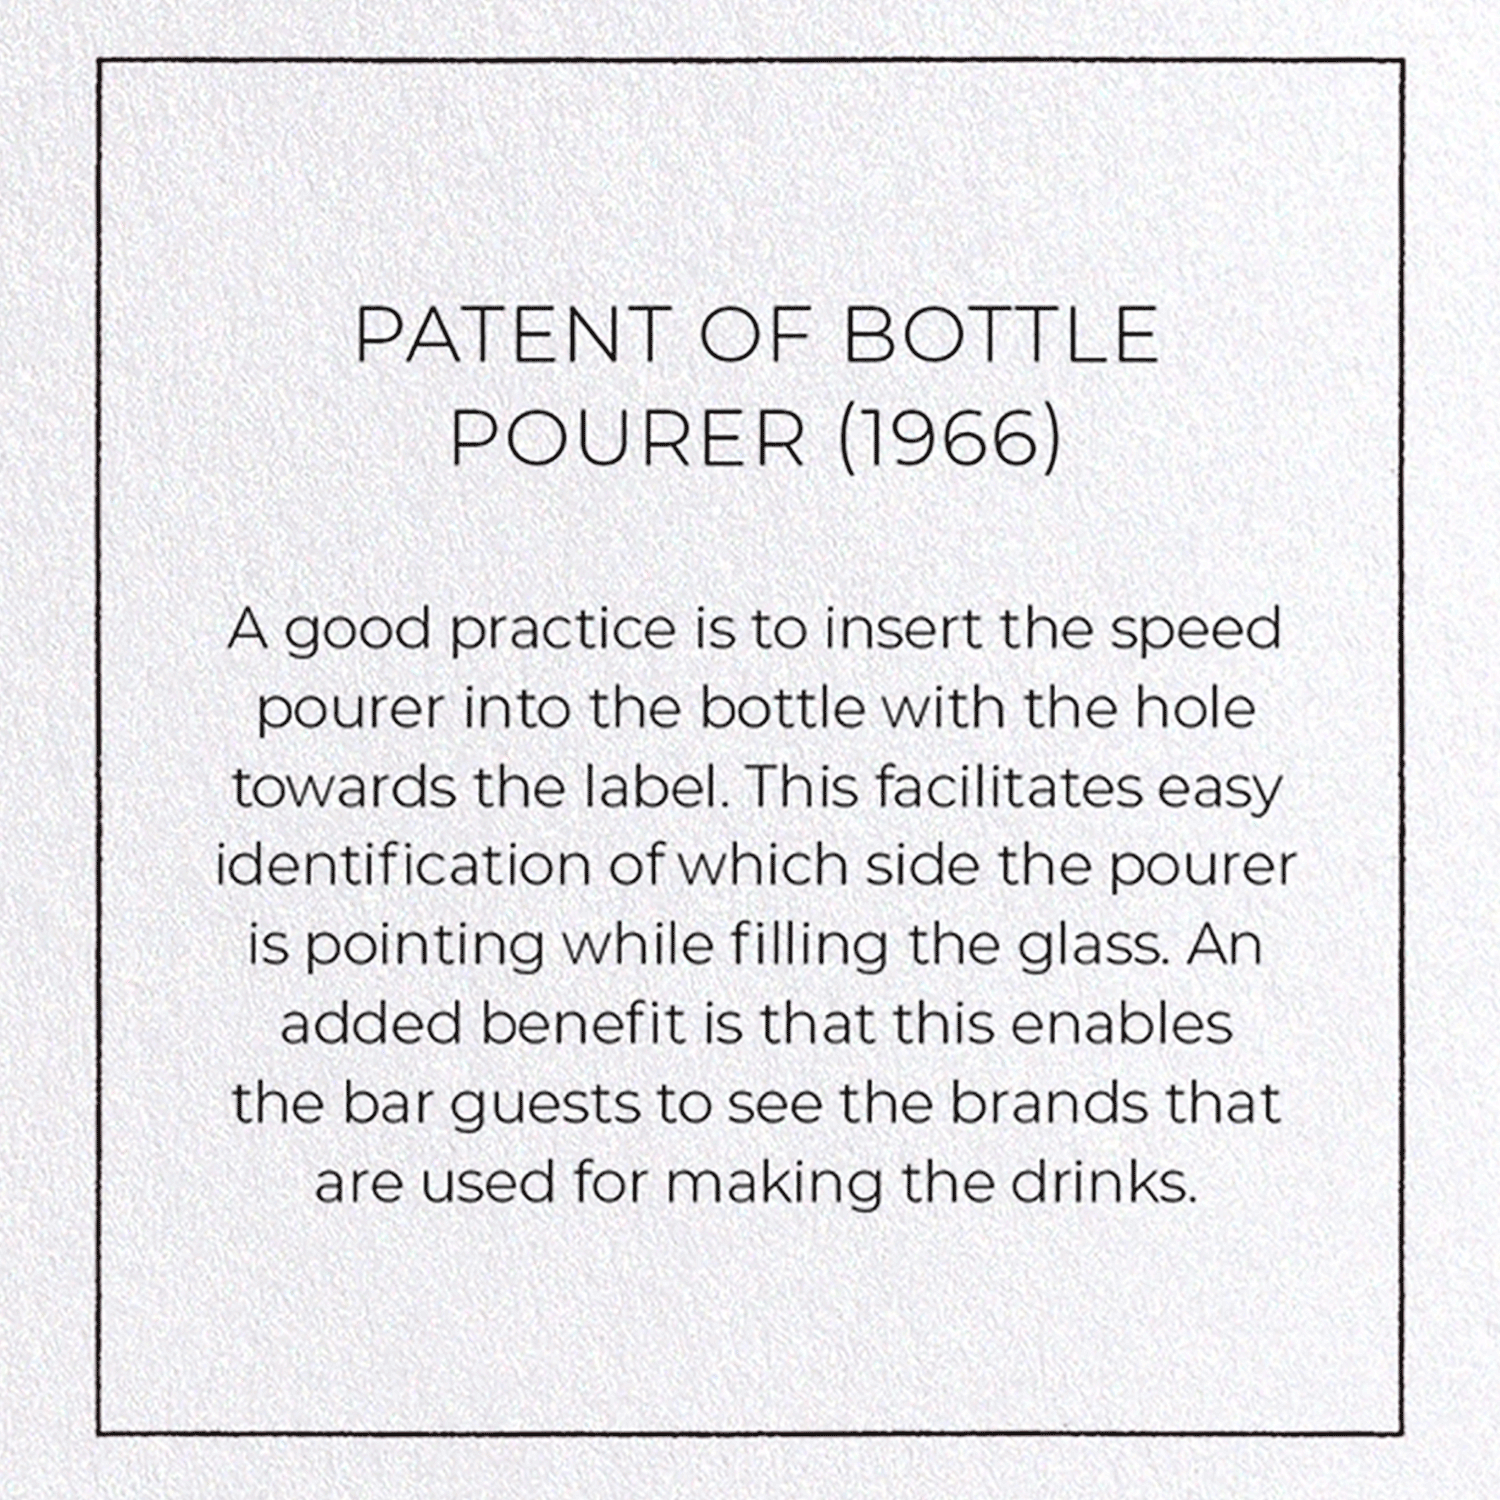 PATENT OF BOTTLE POURER (1966)